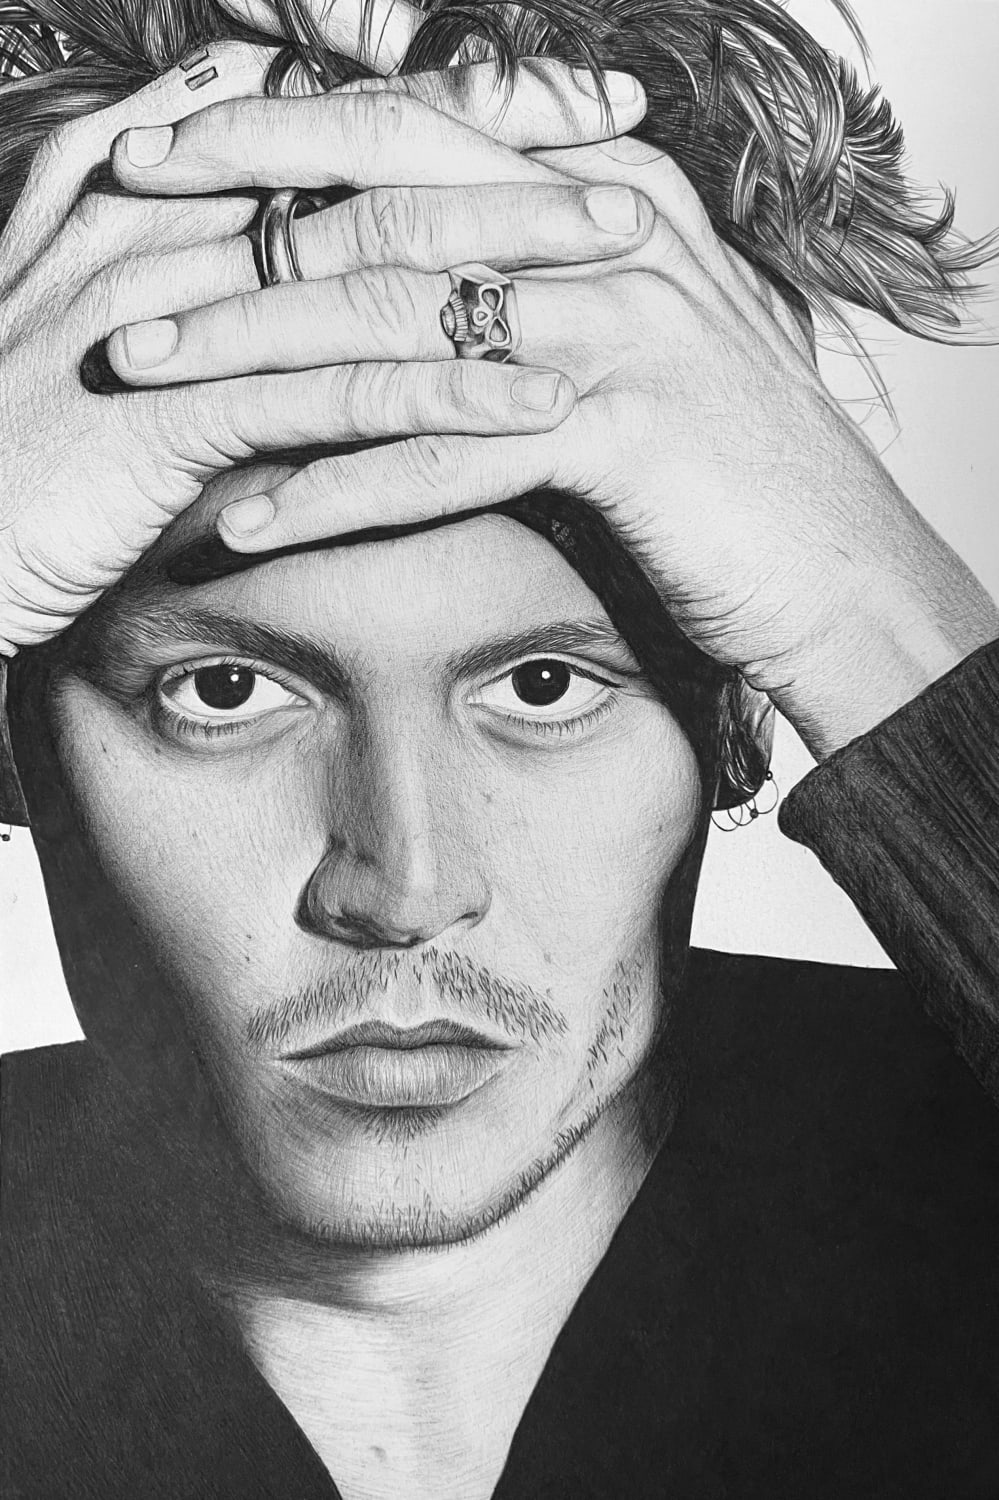 I drew Johnny Depp in ballpoint pen recently